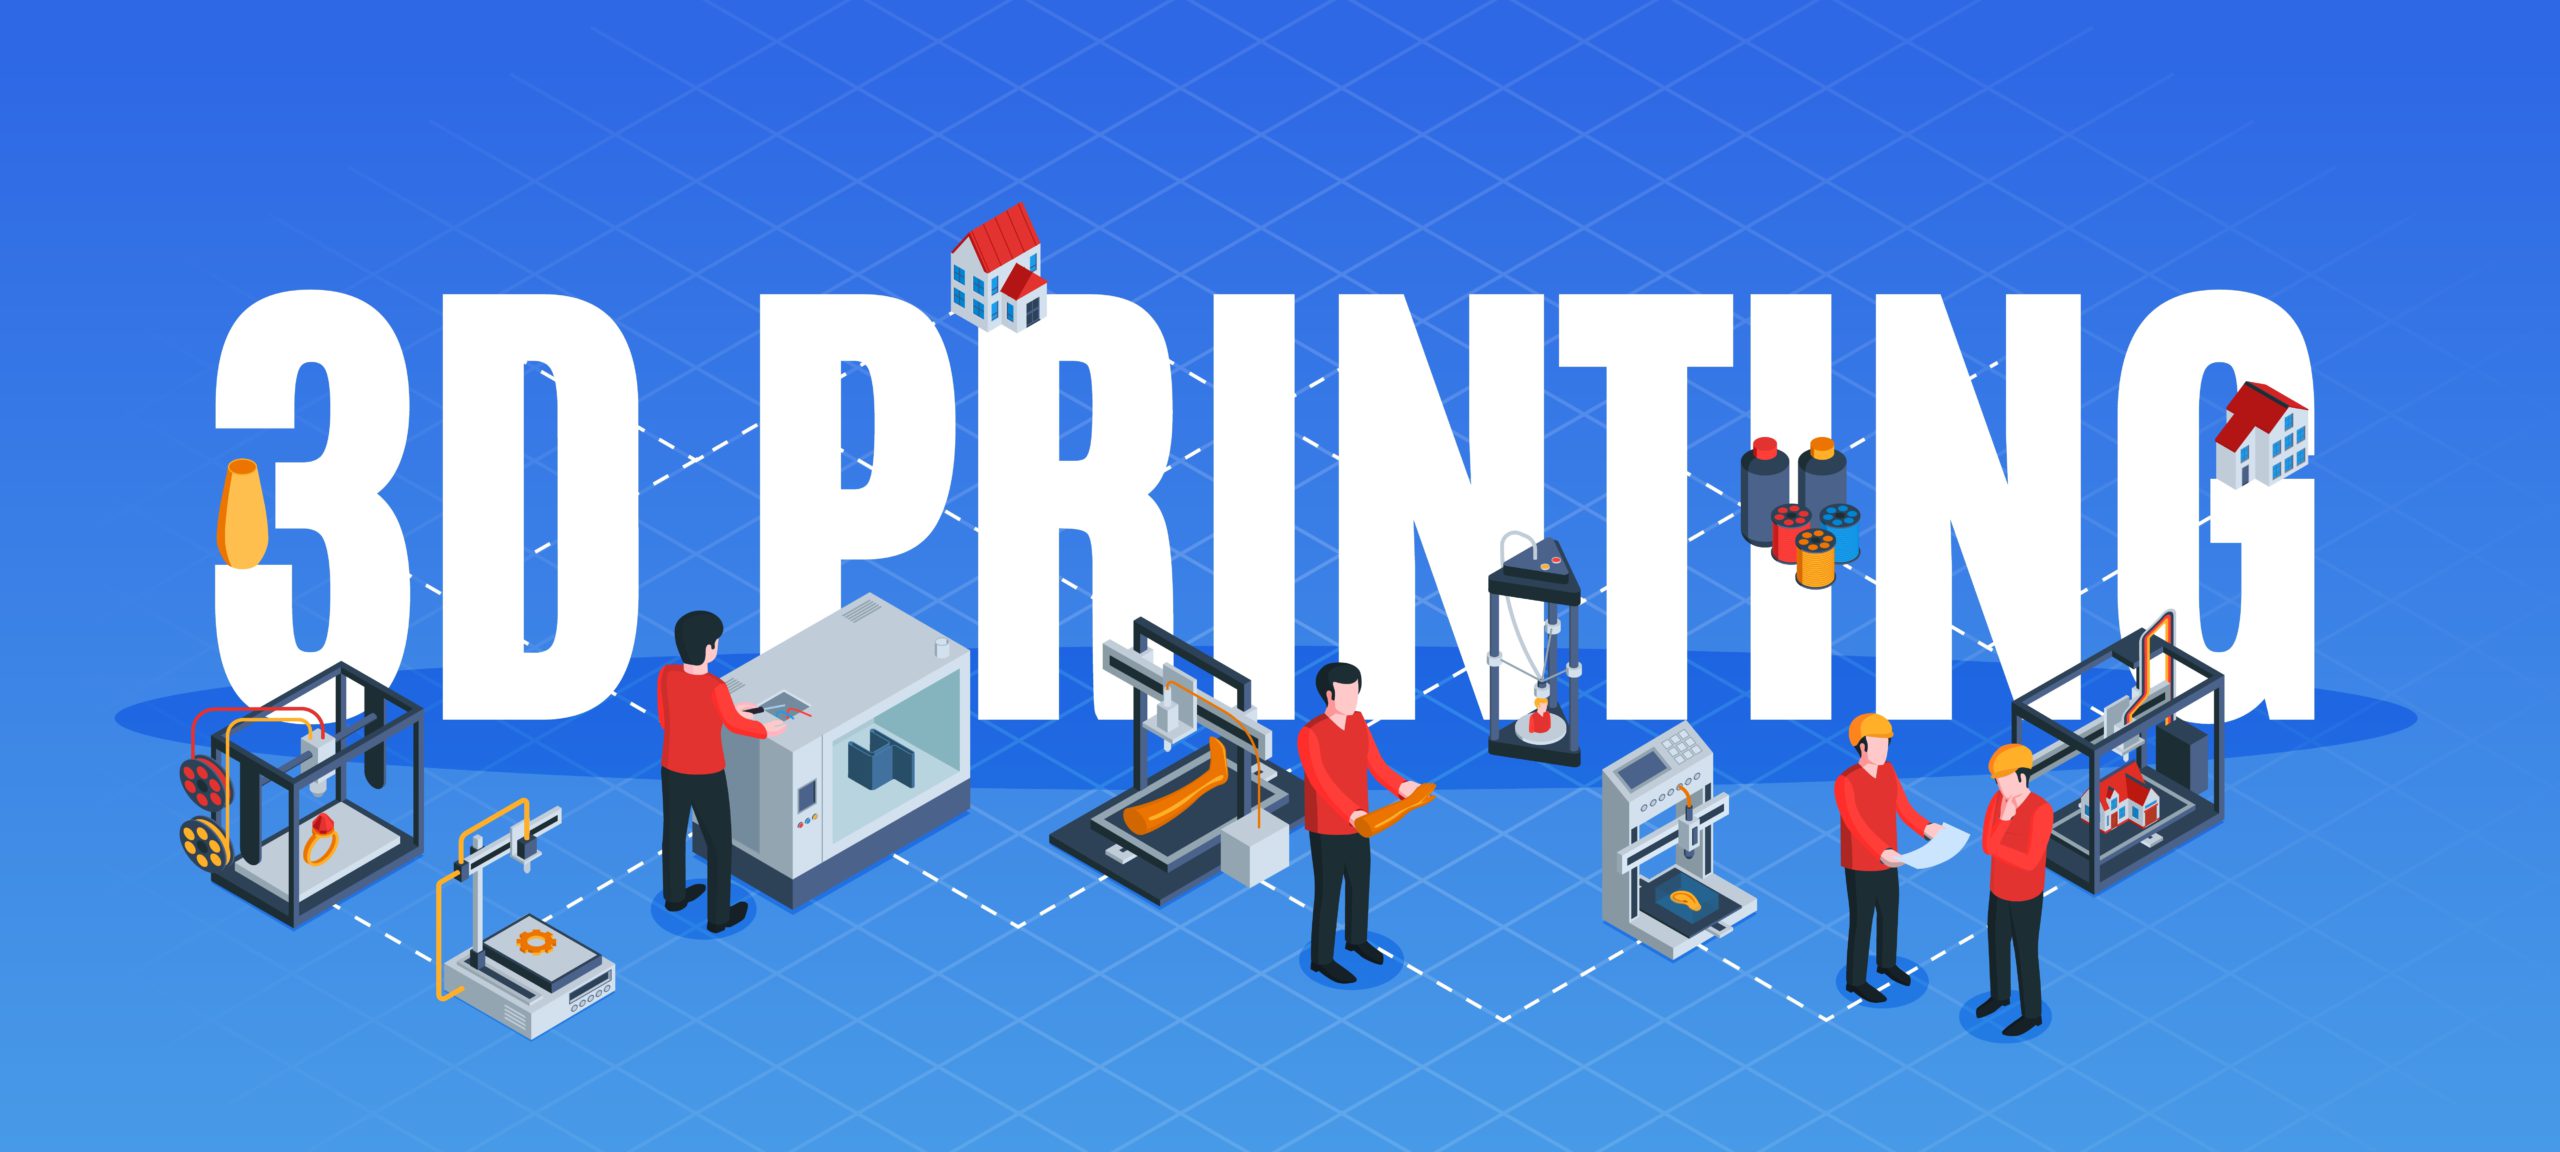 Career Opportunities in 3D printing